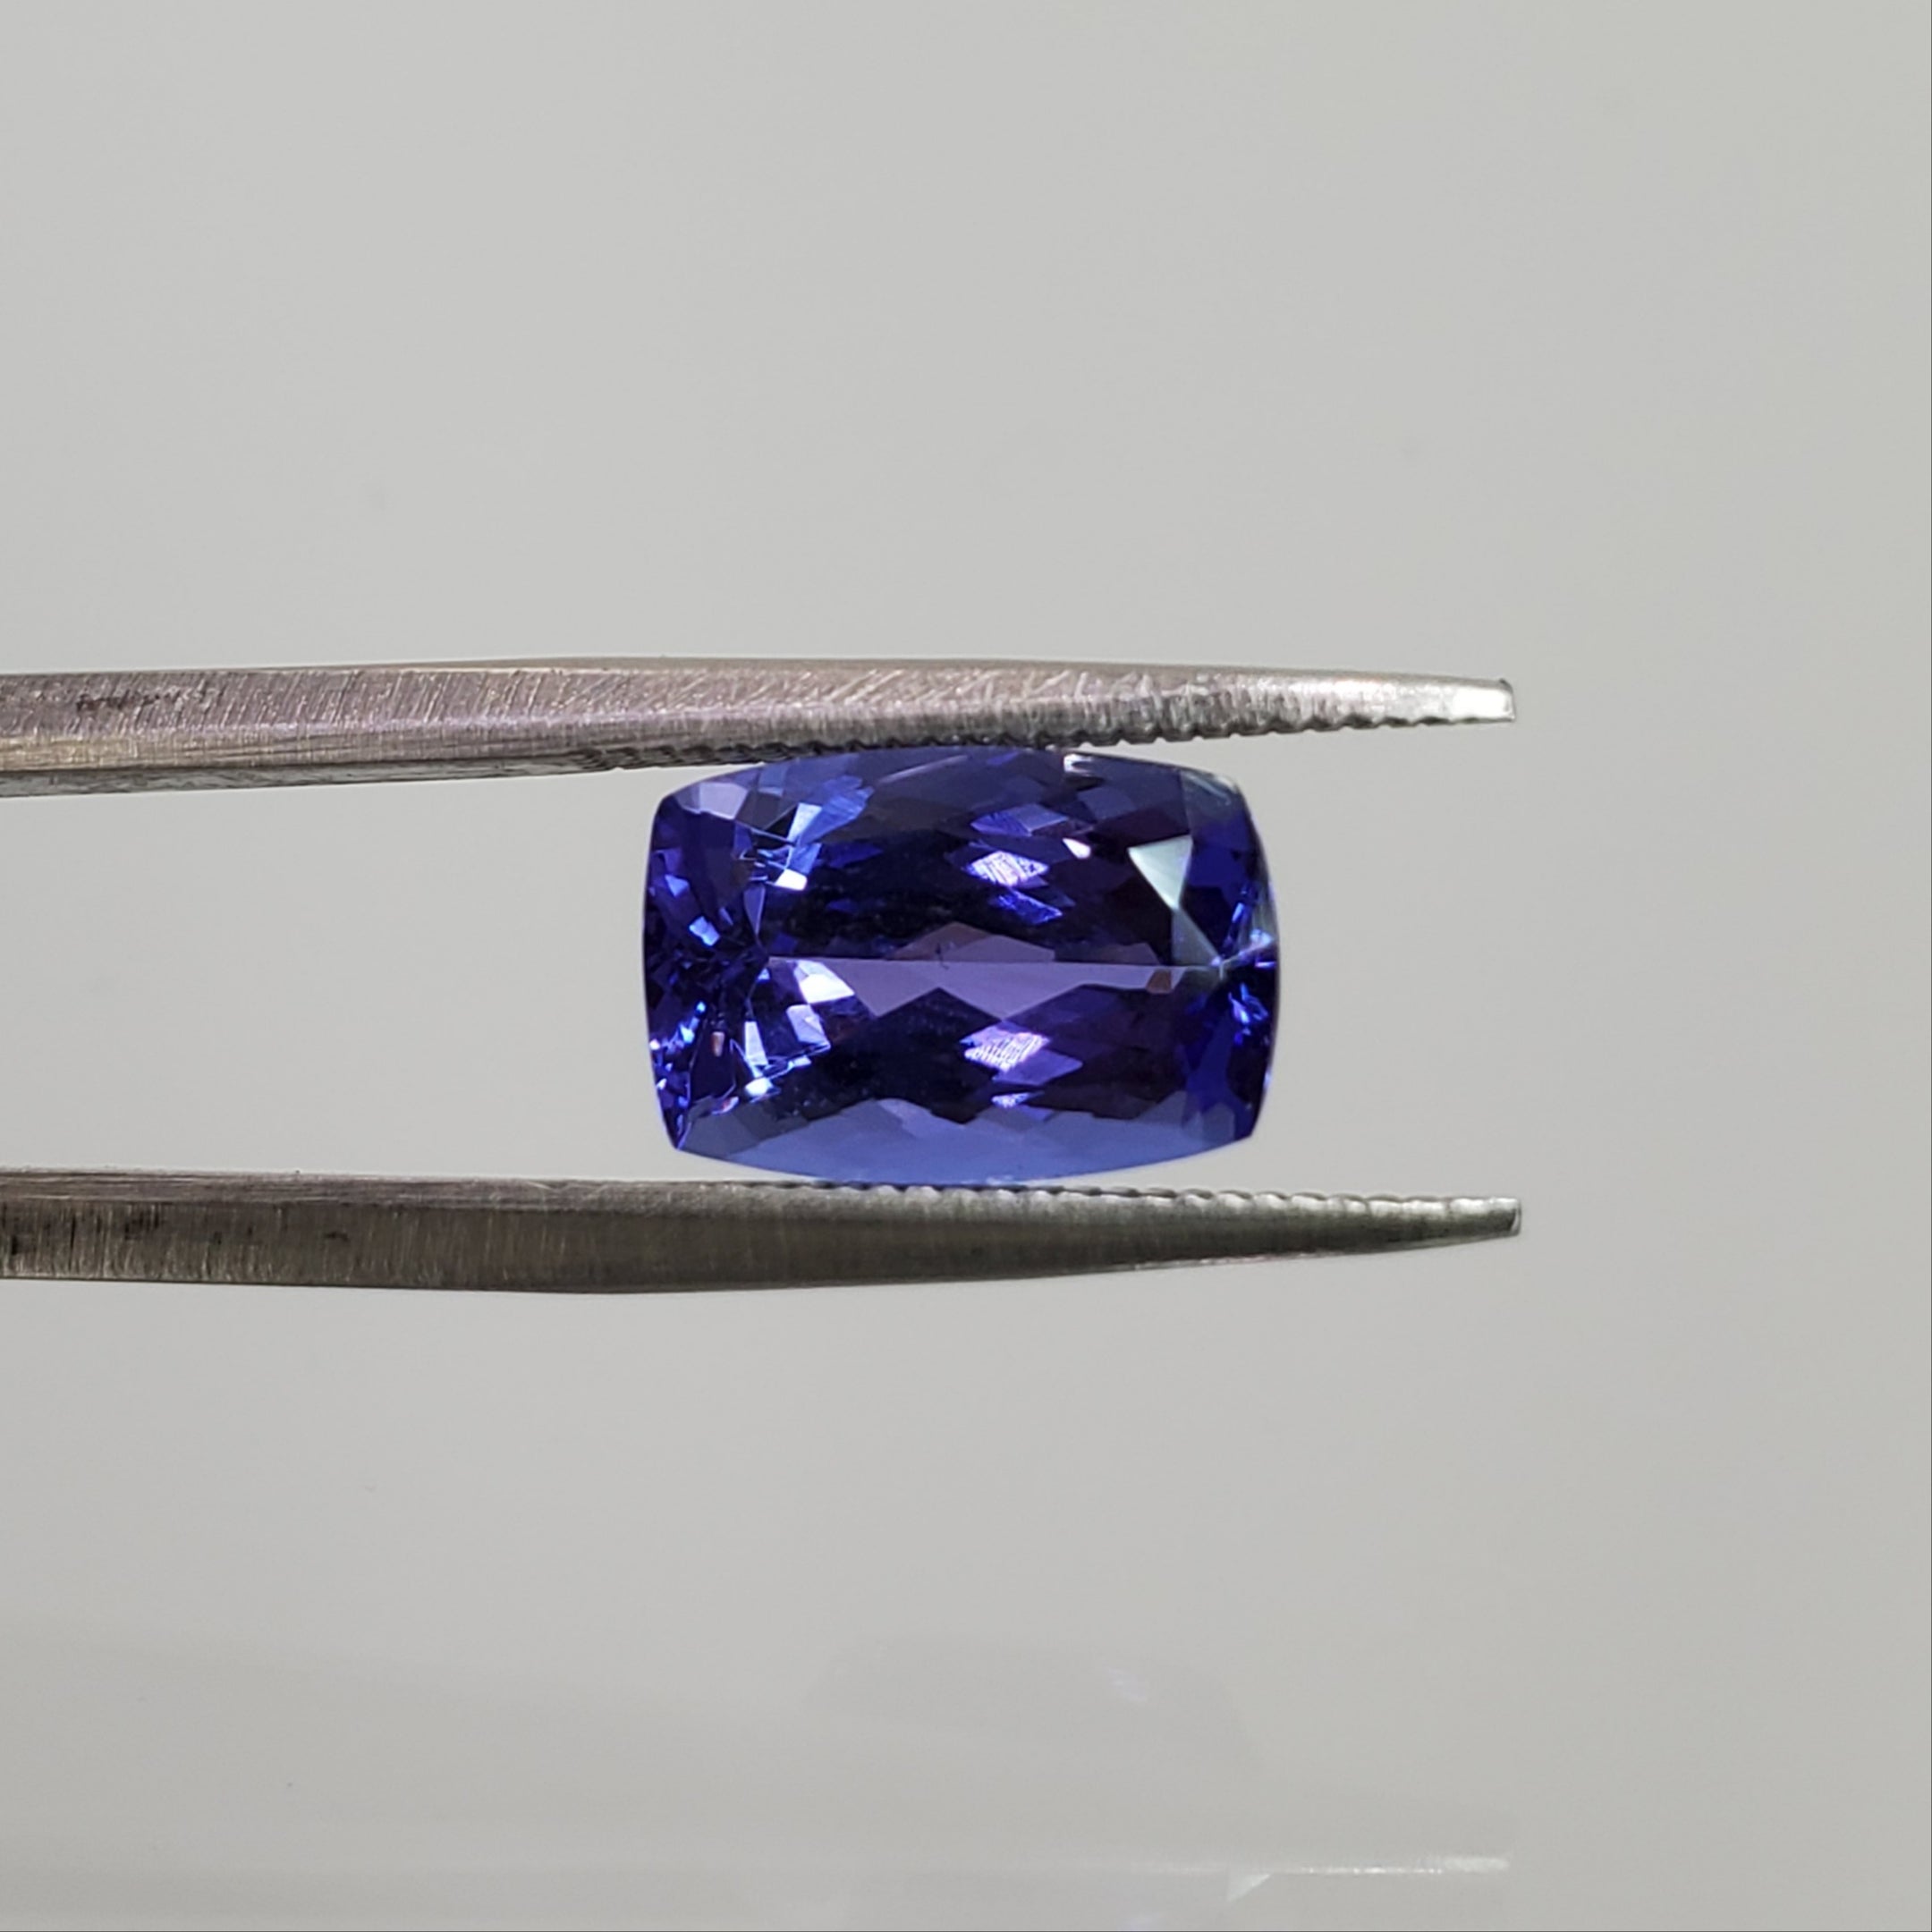 3.83 carat cushion-cut violet blue tanzanite loose gemstone